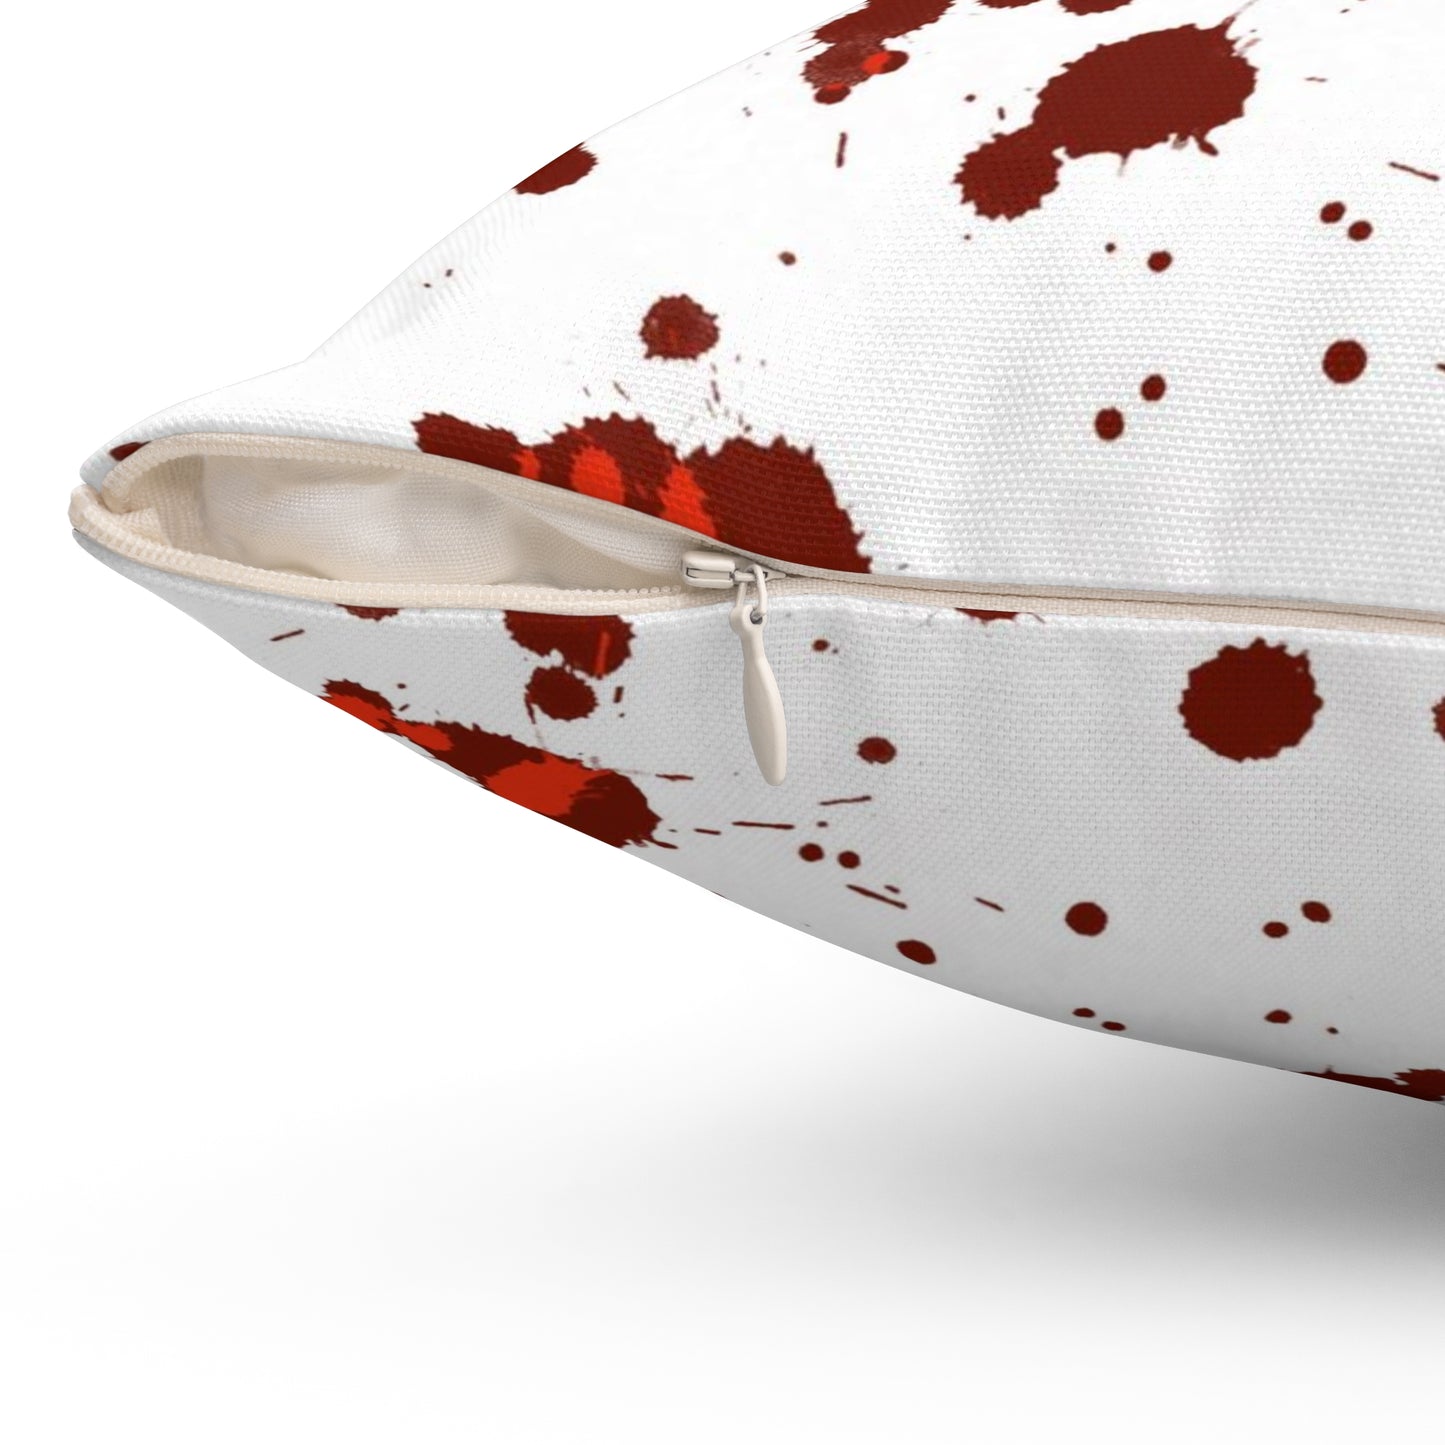 Blood Splatter True Crime Polyester Square Pillow